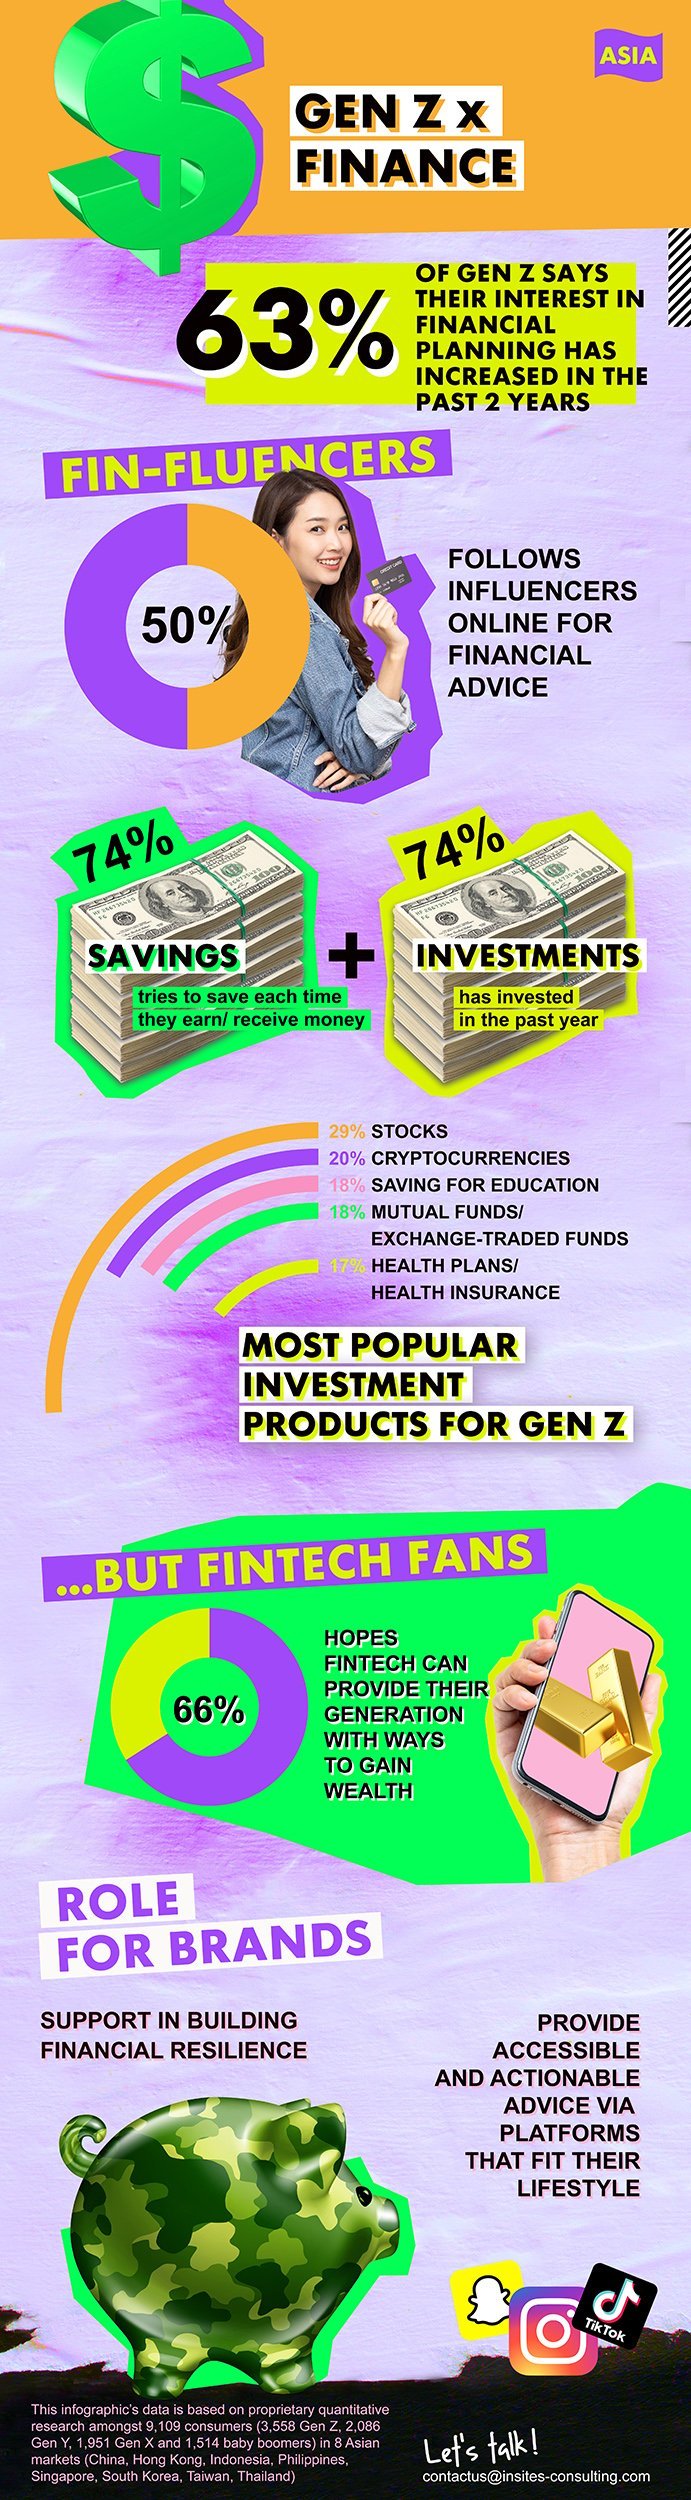 Gen Z x Finance Infographic Asia